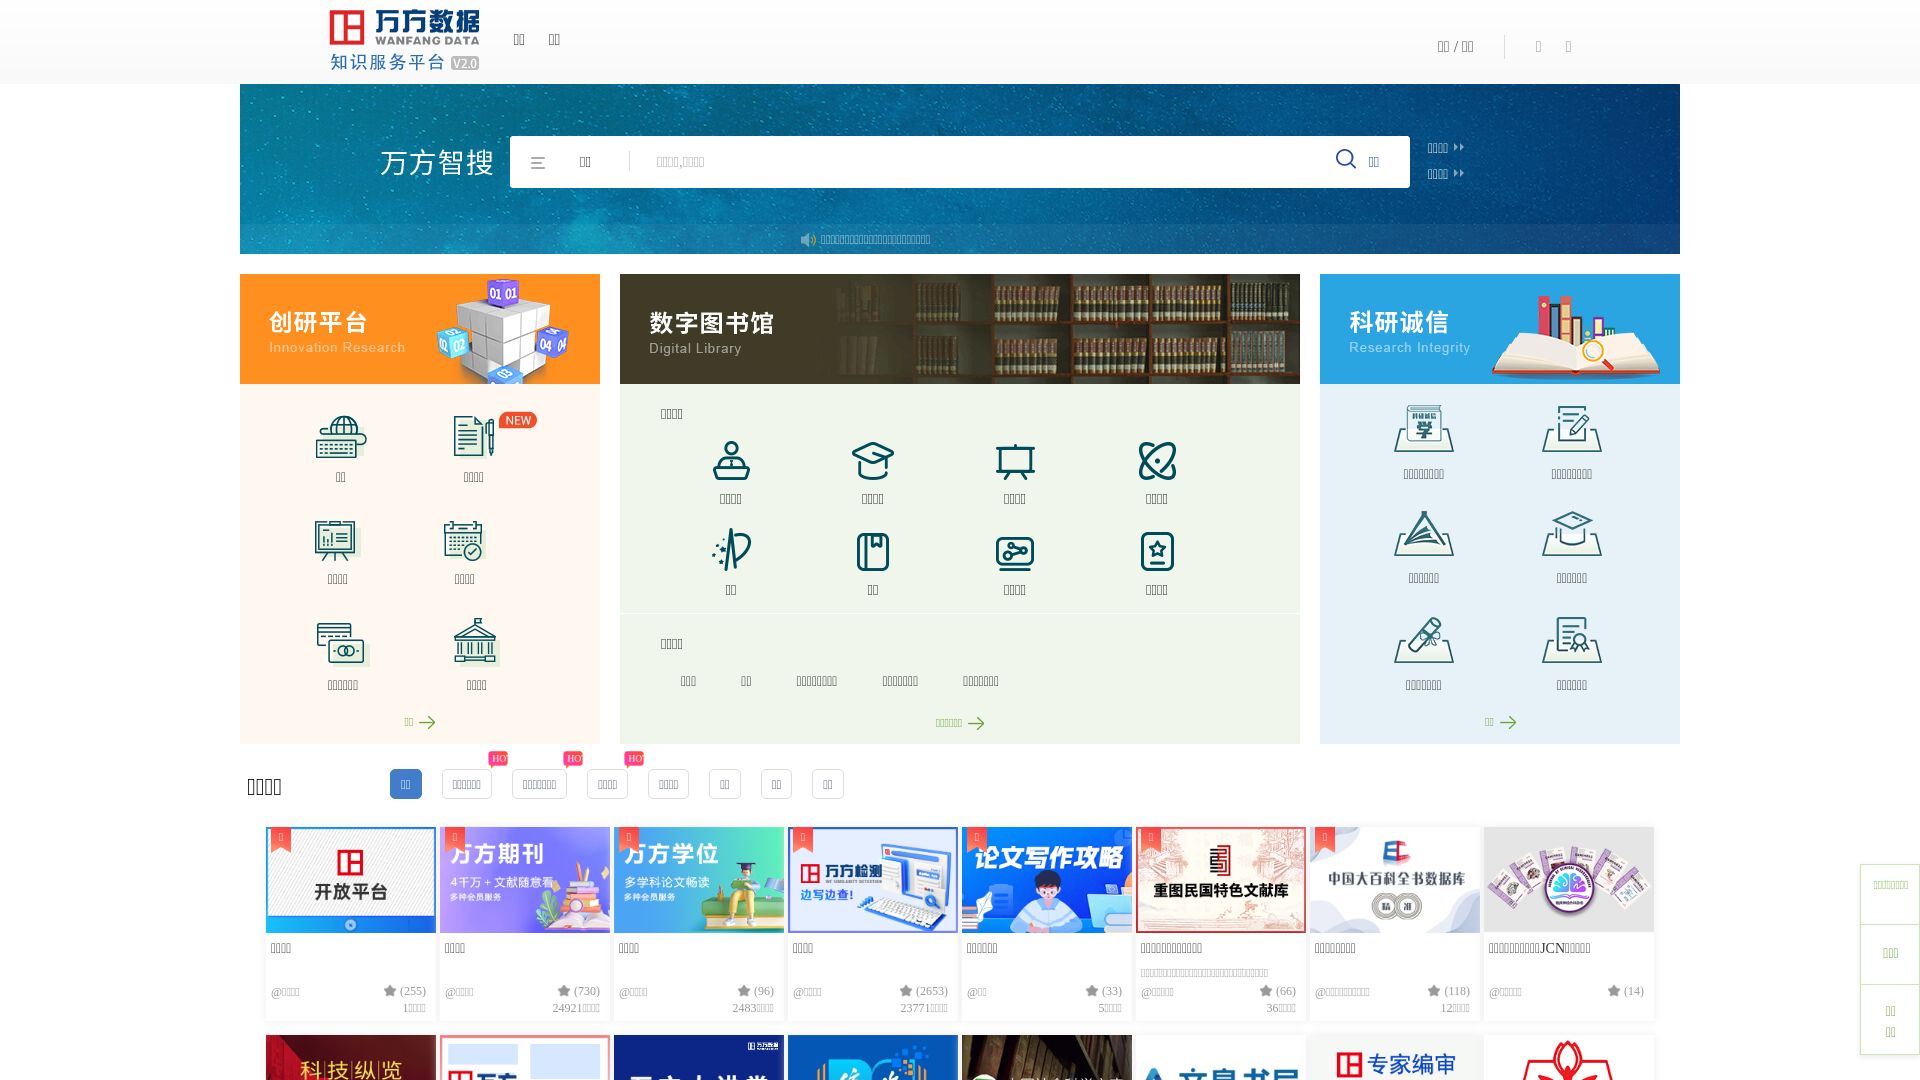 Estado web wanfangdata.com.cn está   ONLINE